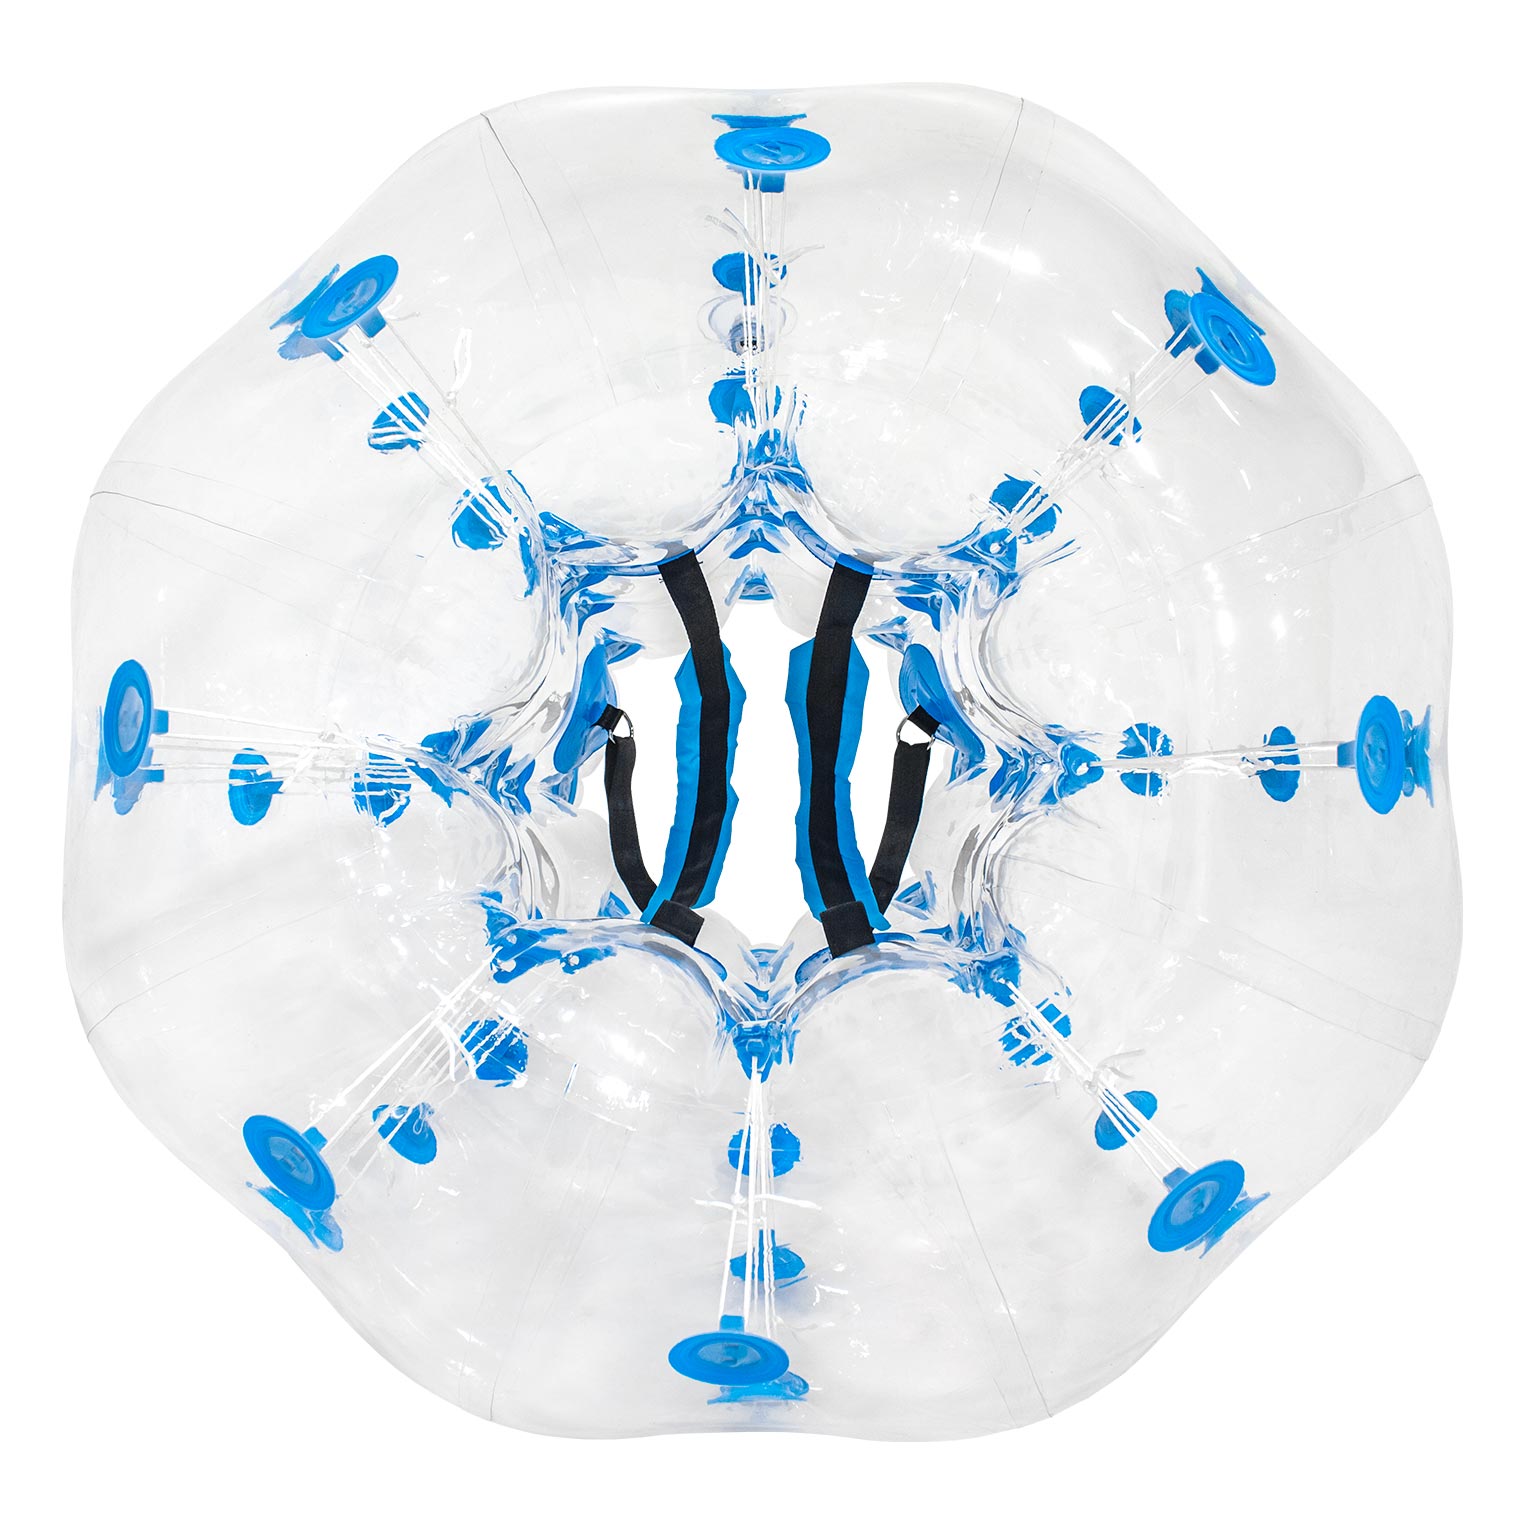 Games2U Bubble Ball Vuxen 1.5m Blue/Clear PVC